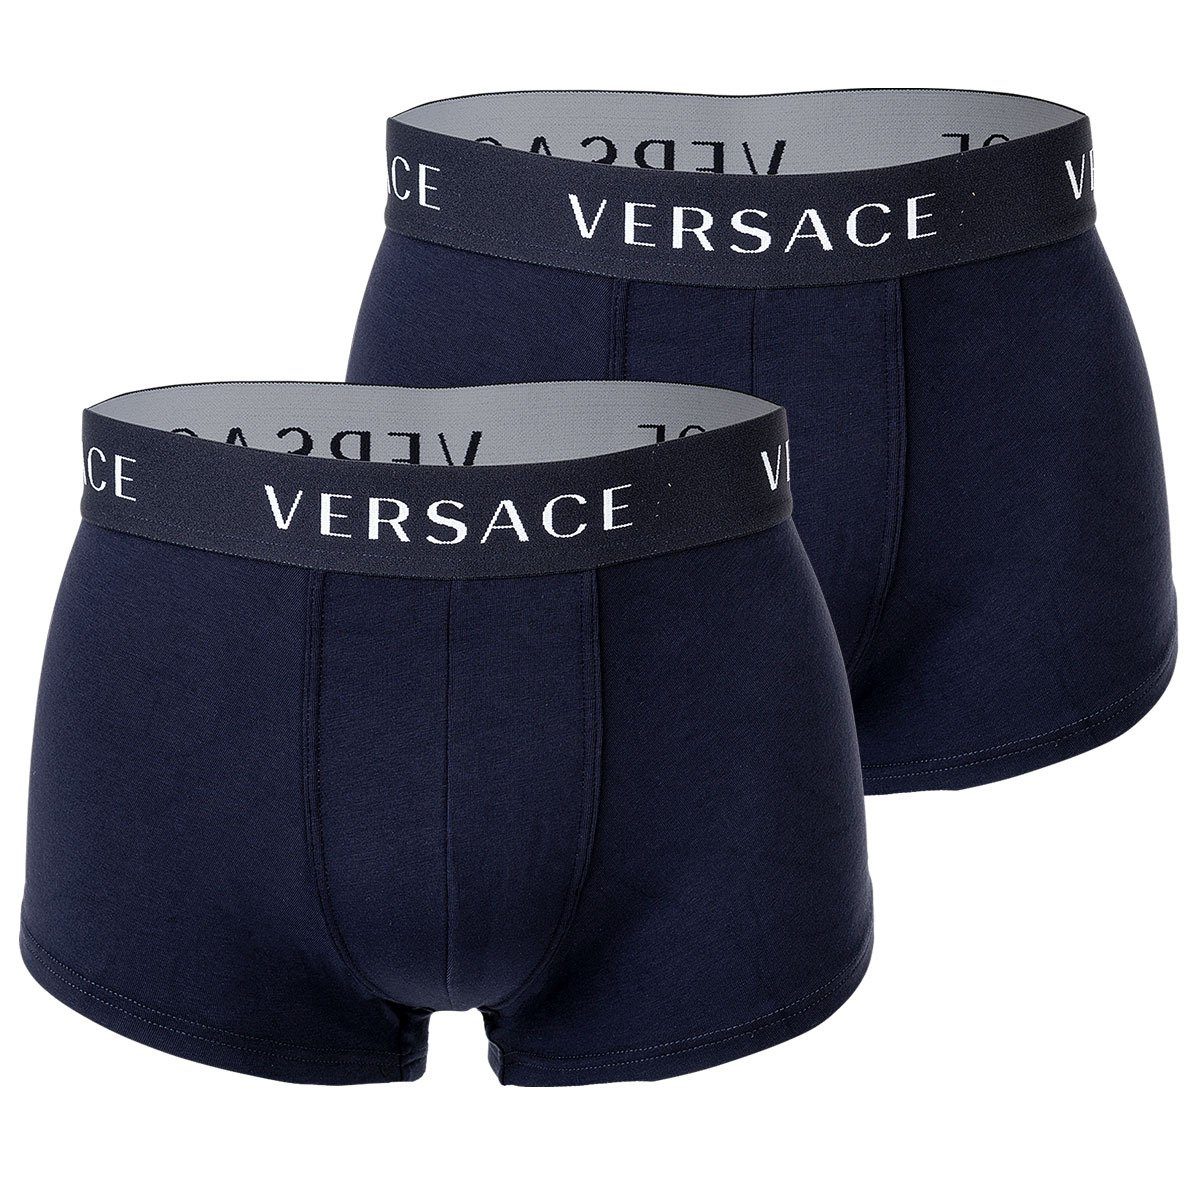 Versace Boxer Herren Boxer Shorts, 2er Pack - Trunk Marine